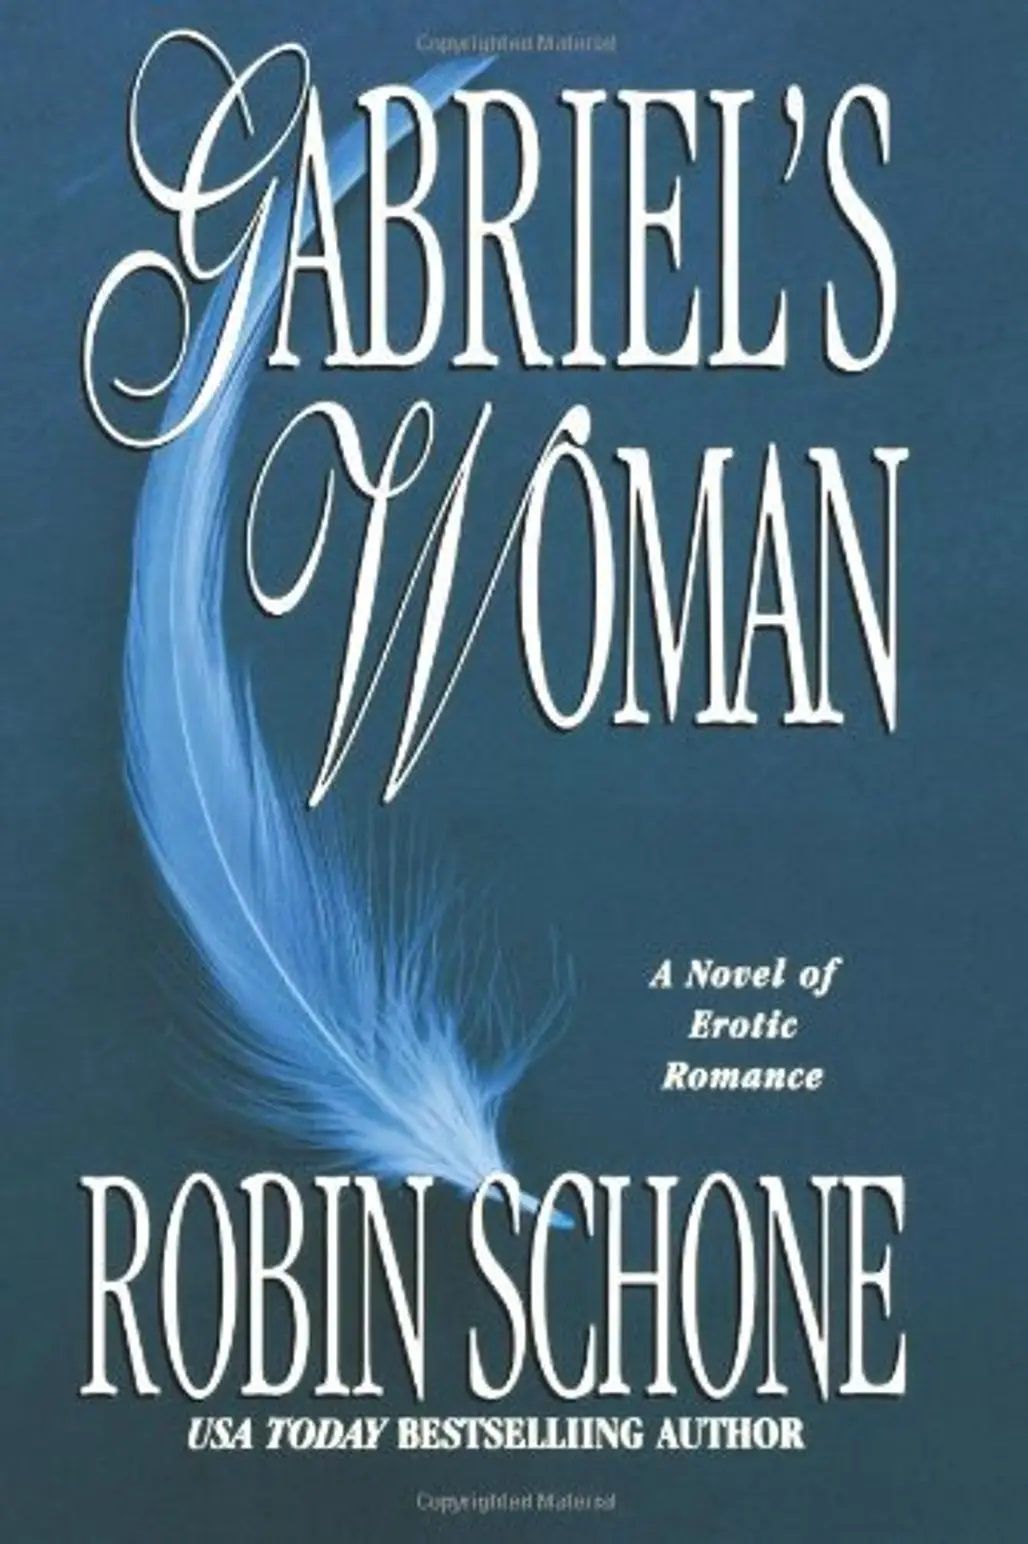 Gabriel’s Woman by Robin Schone